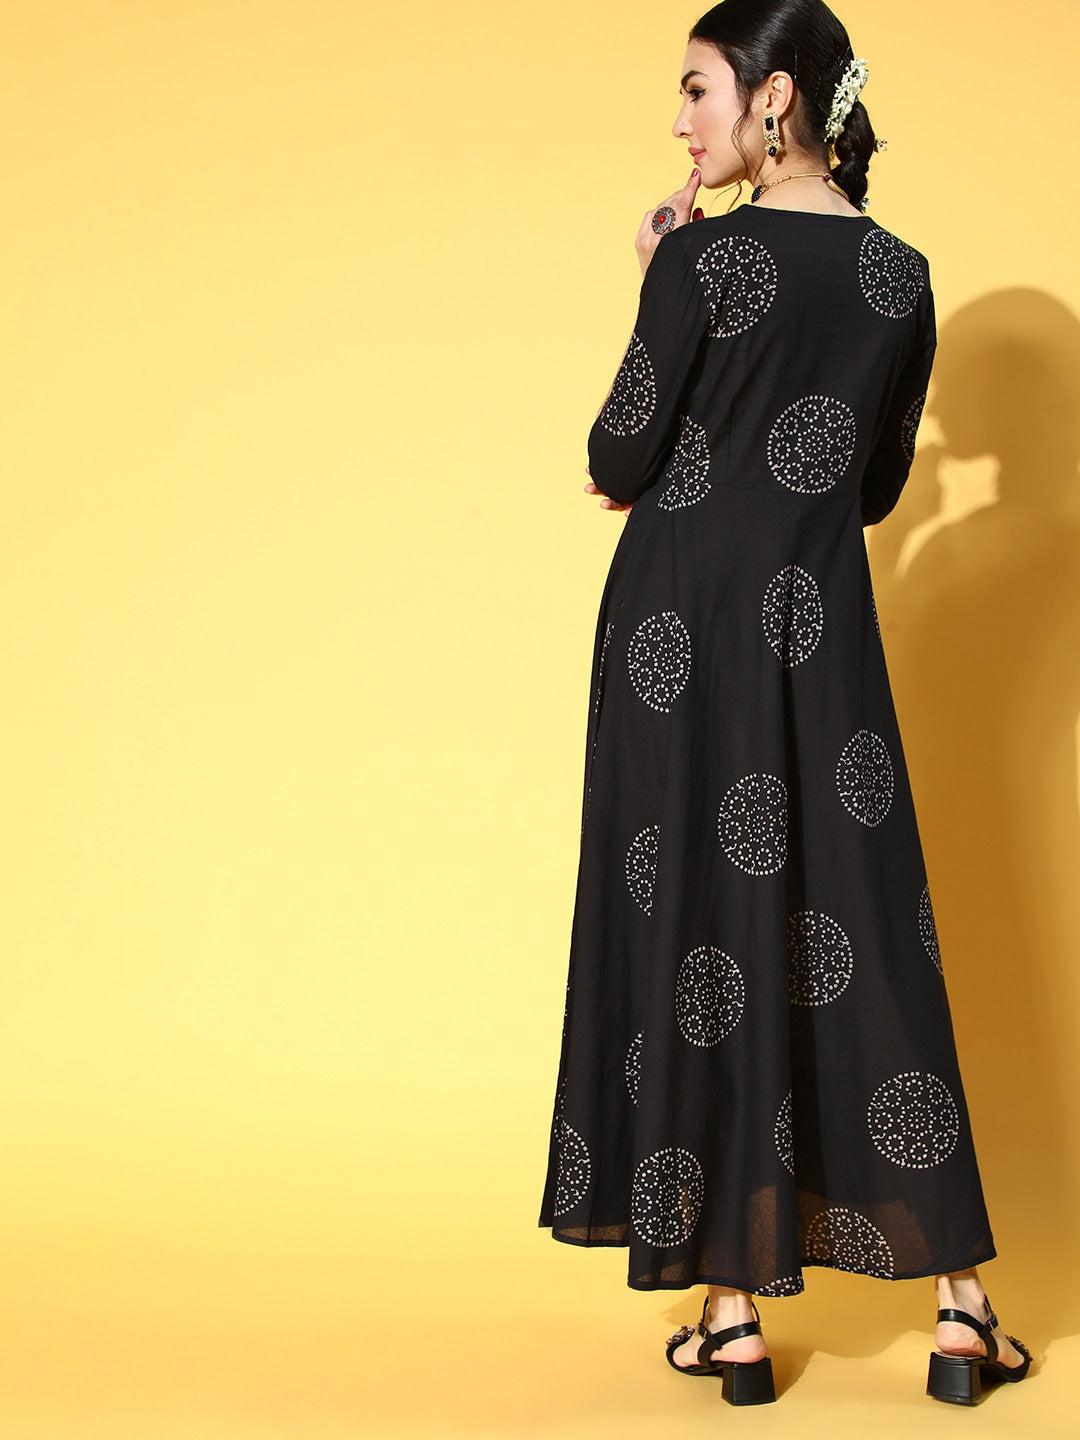 black-white-ethnic-print-dress-10104108BK, Women Clothing, Cotton Dress